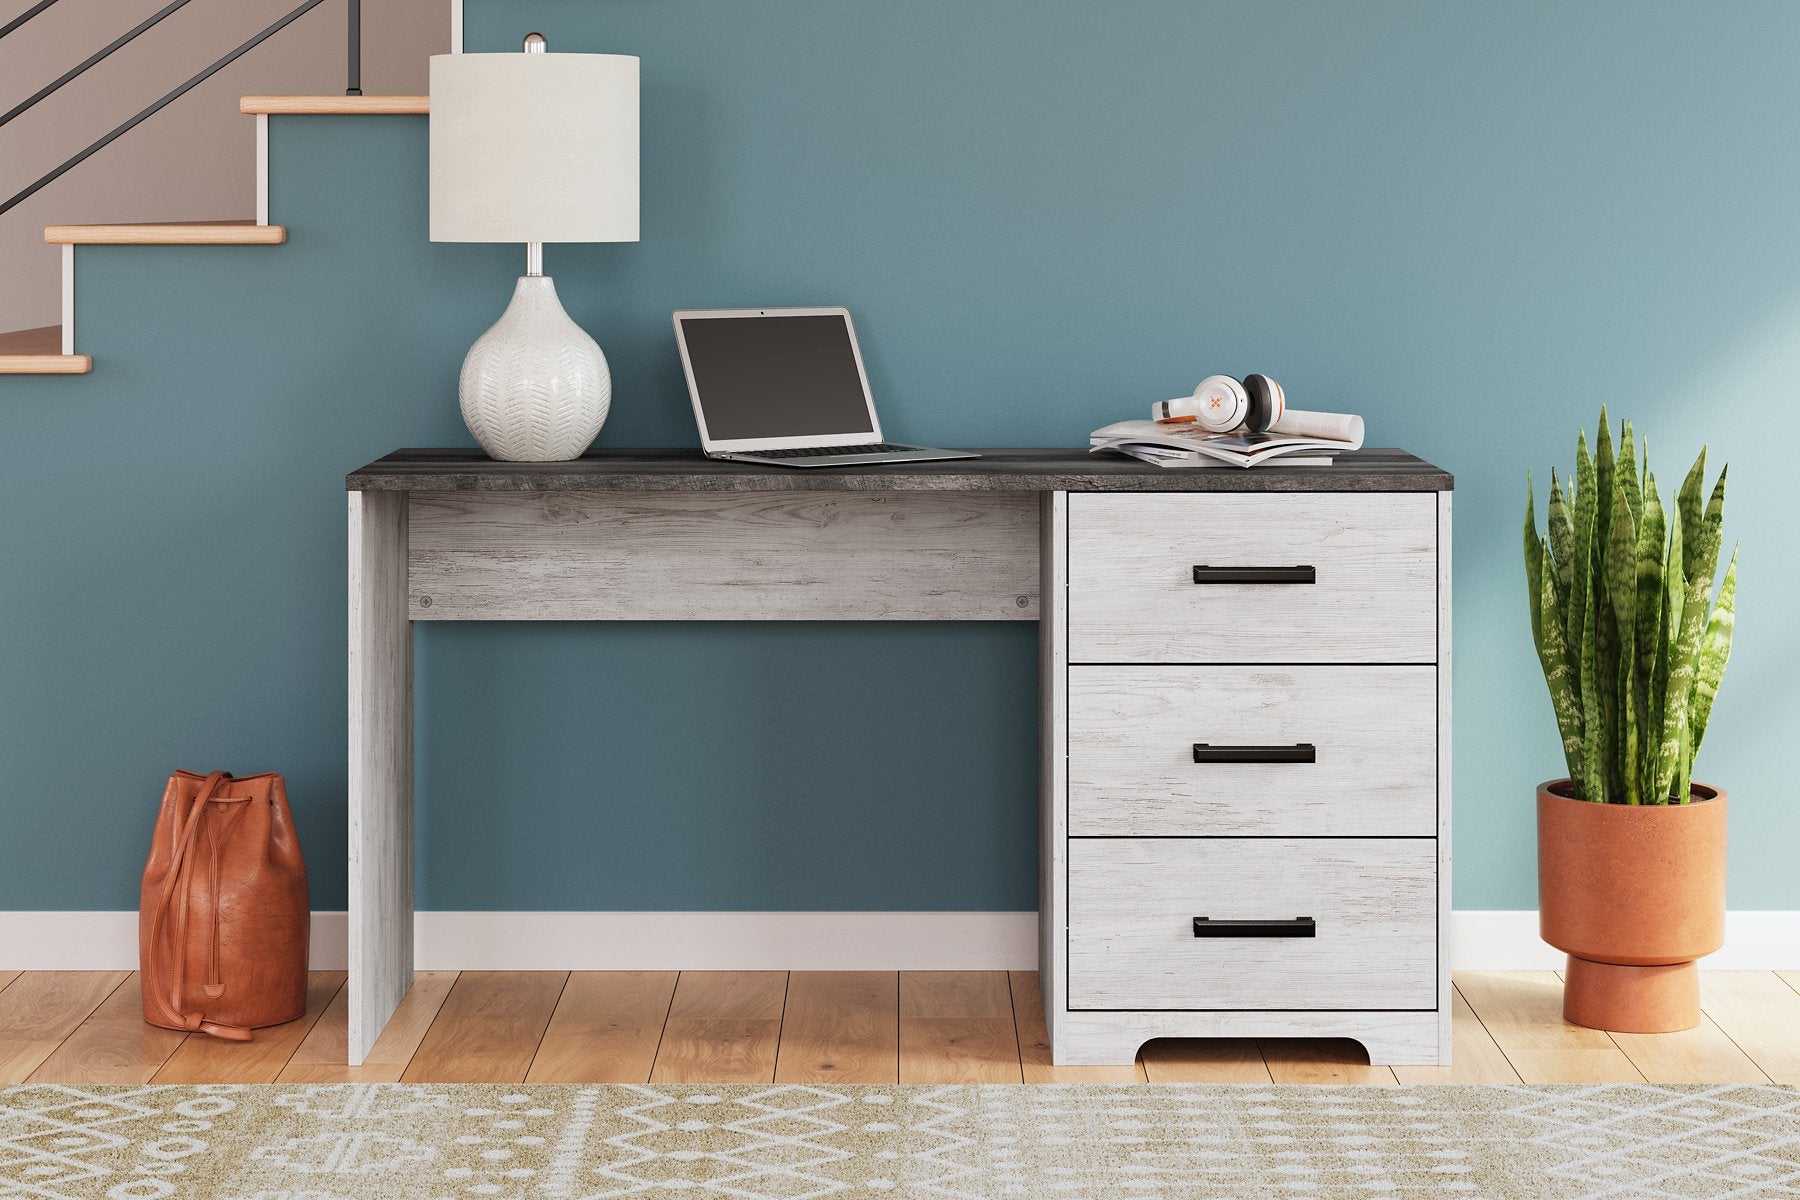 Shawburn 54" Home Office Desk - Half Price Furniture